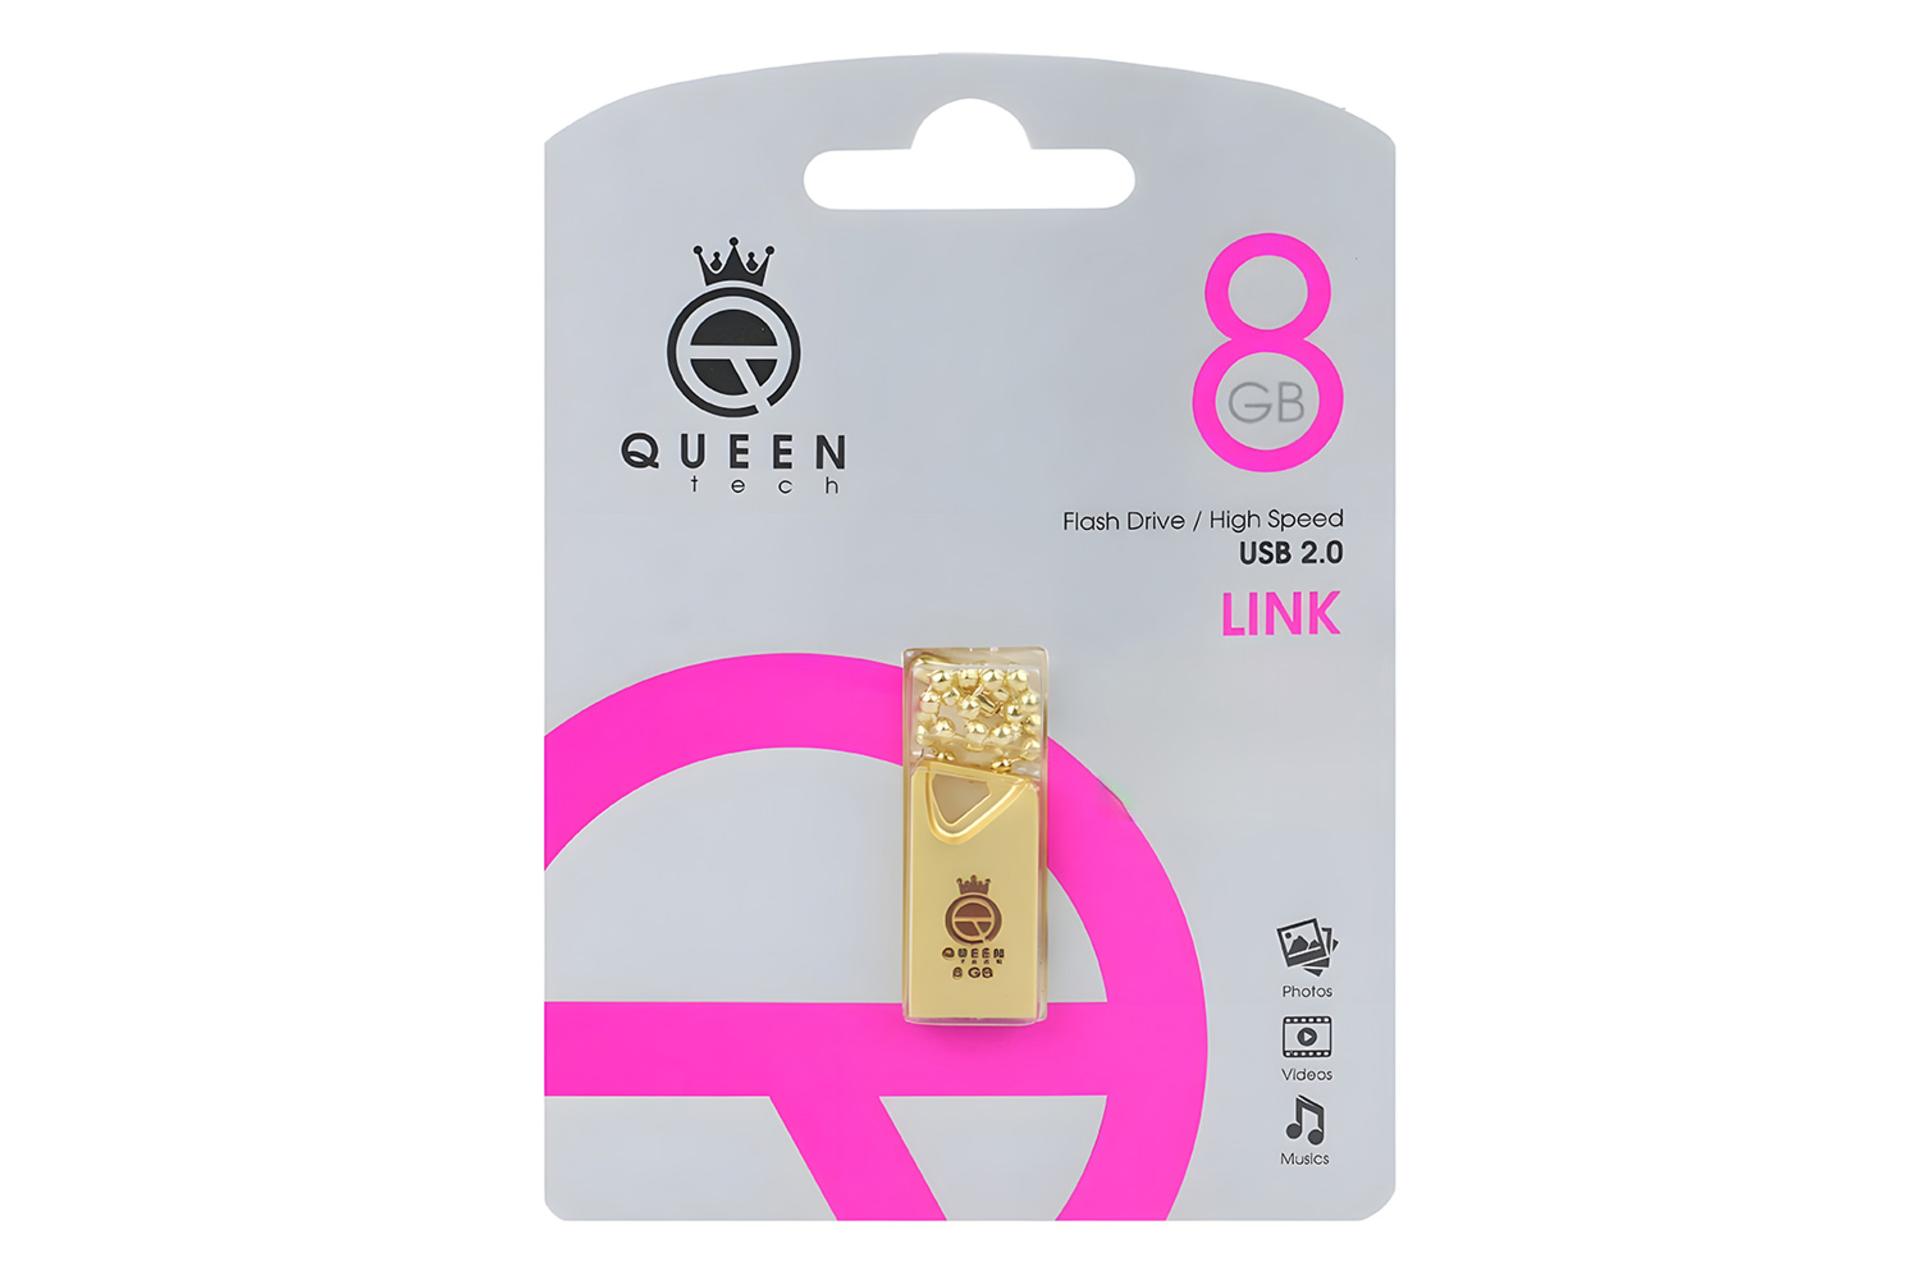 جعبه فلش مموری کوئین تک Queen Tech LINK 8GB USB 2.0